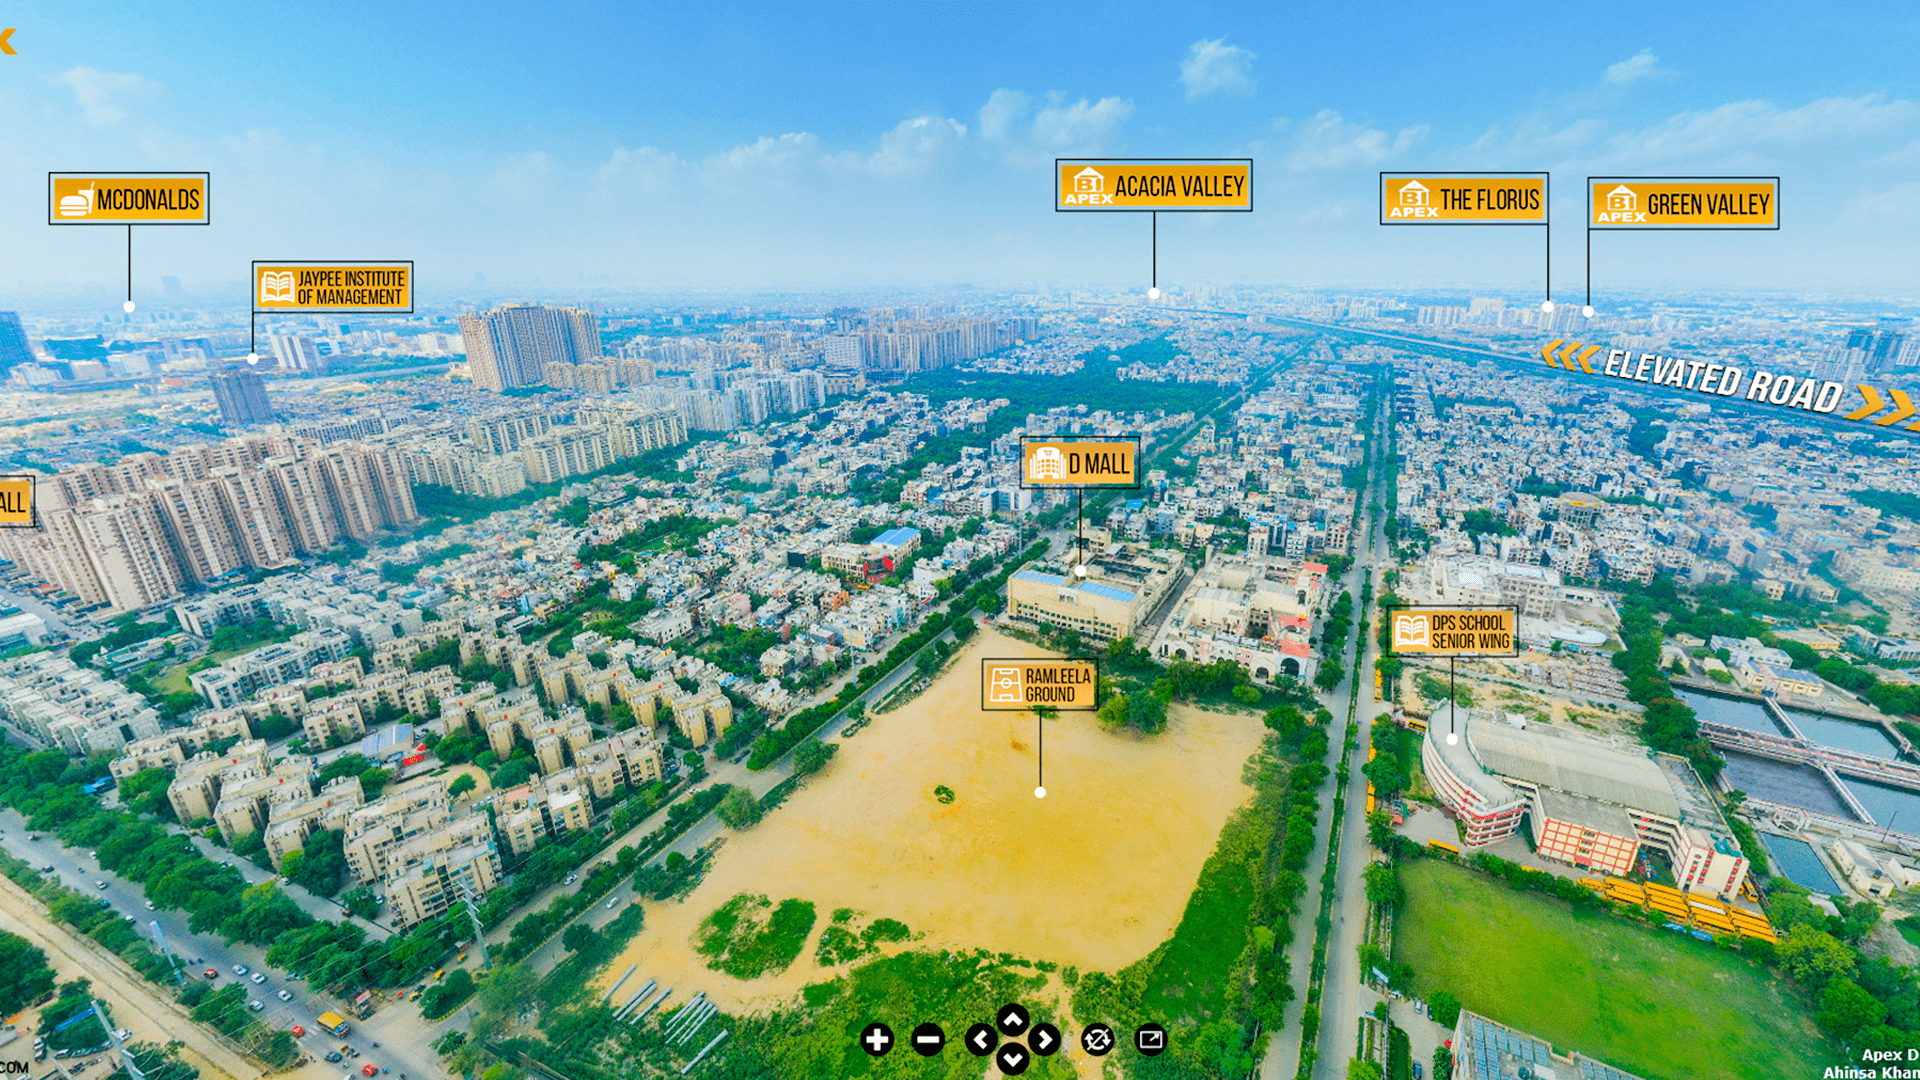 ApexDRio Construction View Virtual Tour  in Ghaziabad